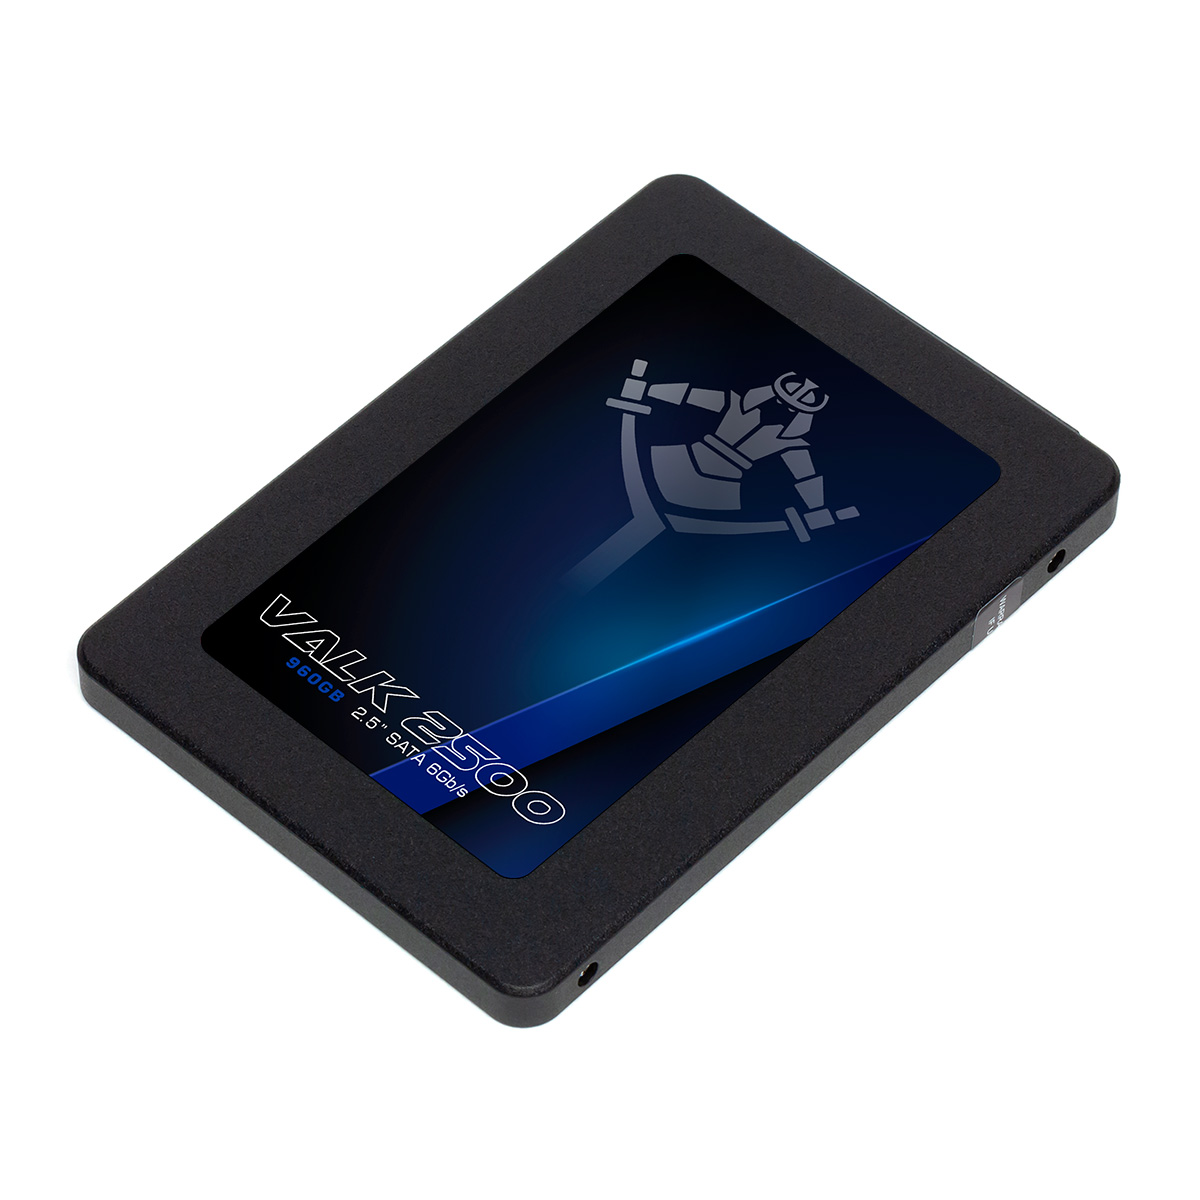 UNIDAD SSD YEYIAN YCV-051820-5 VALK, 960GB, SATA3, 480MB/S, 2.5